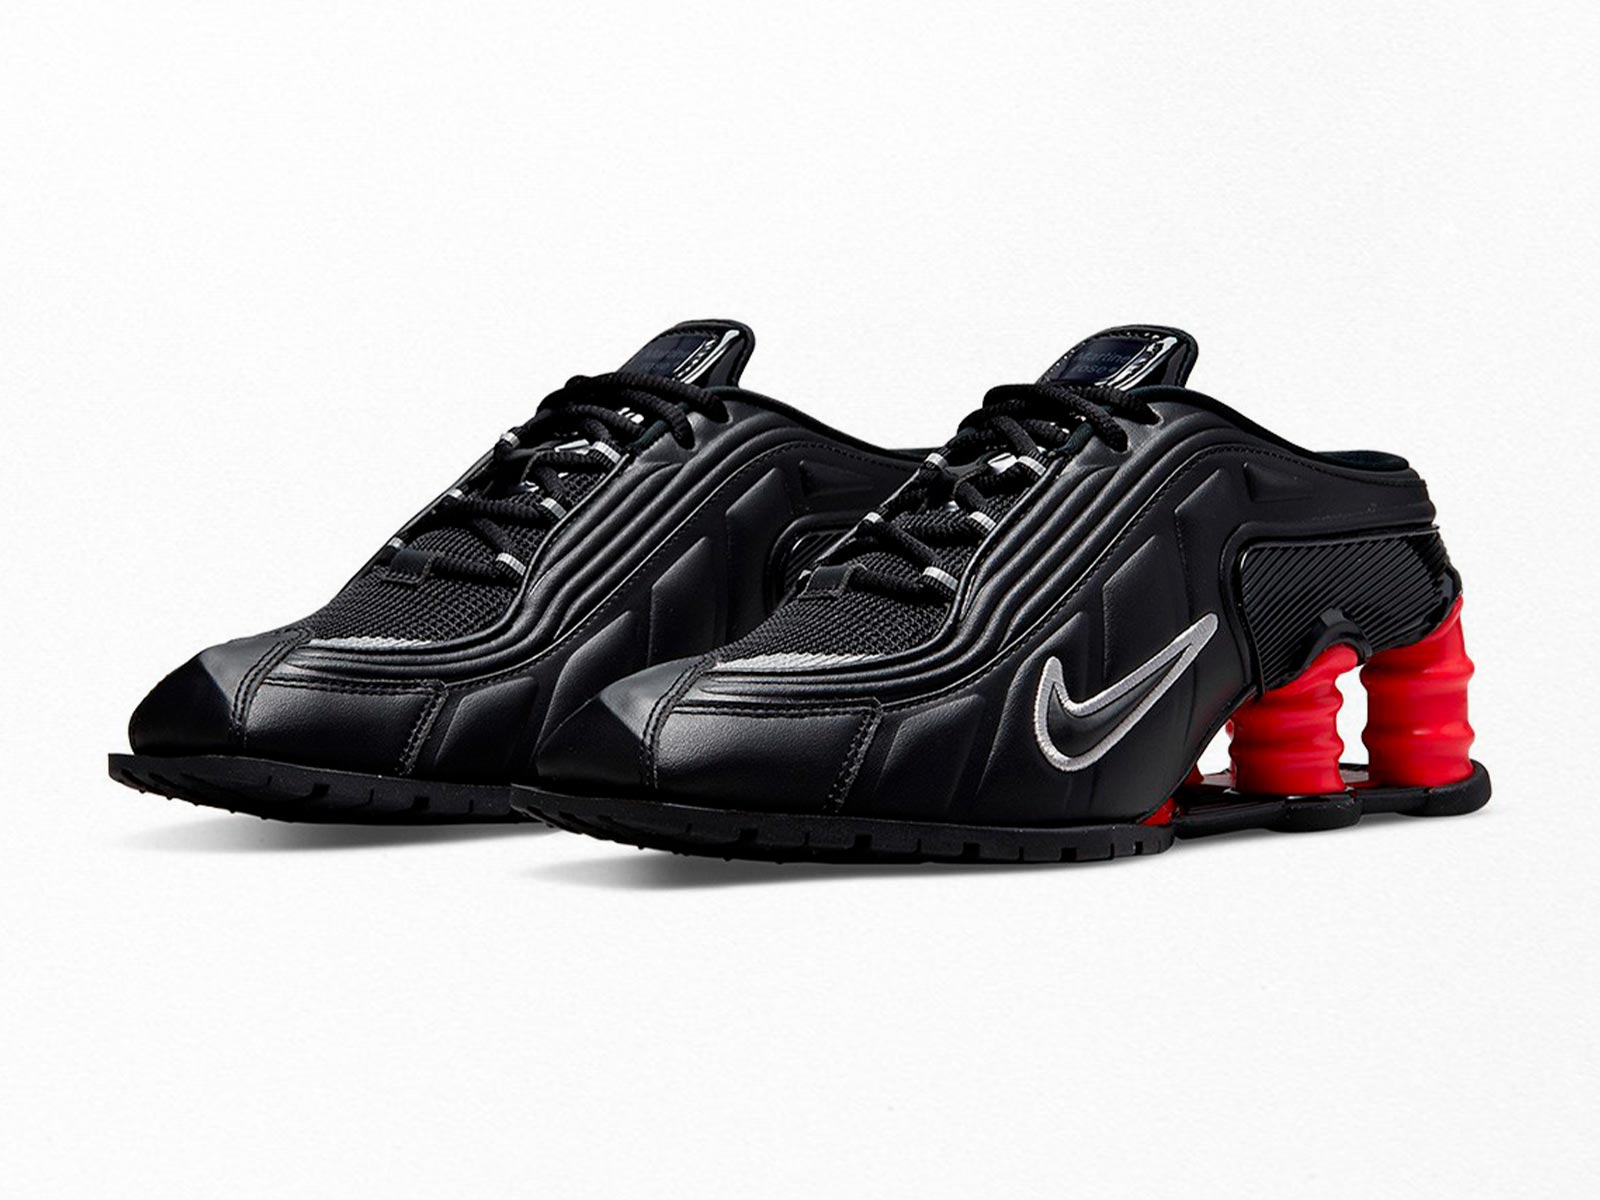 Más detalles sobre las Martine Rose x Nike Shox MR4 ‘Black Red’